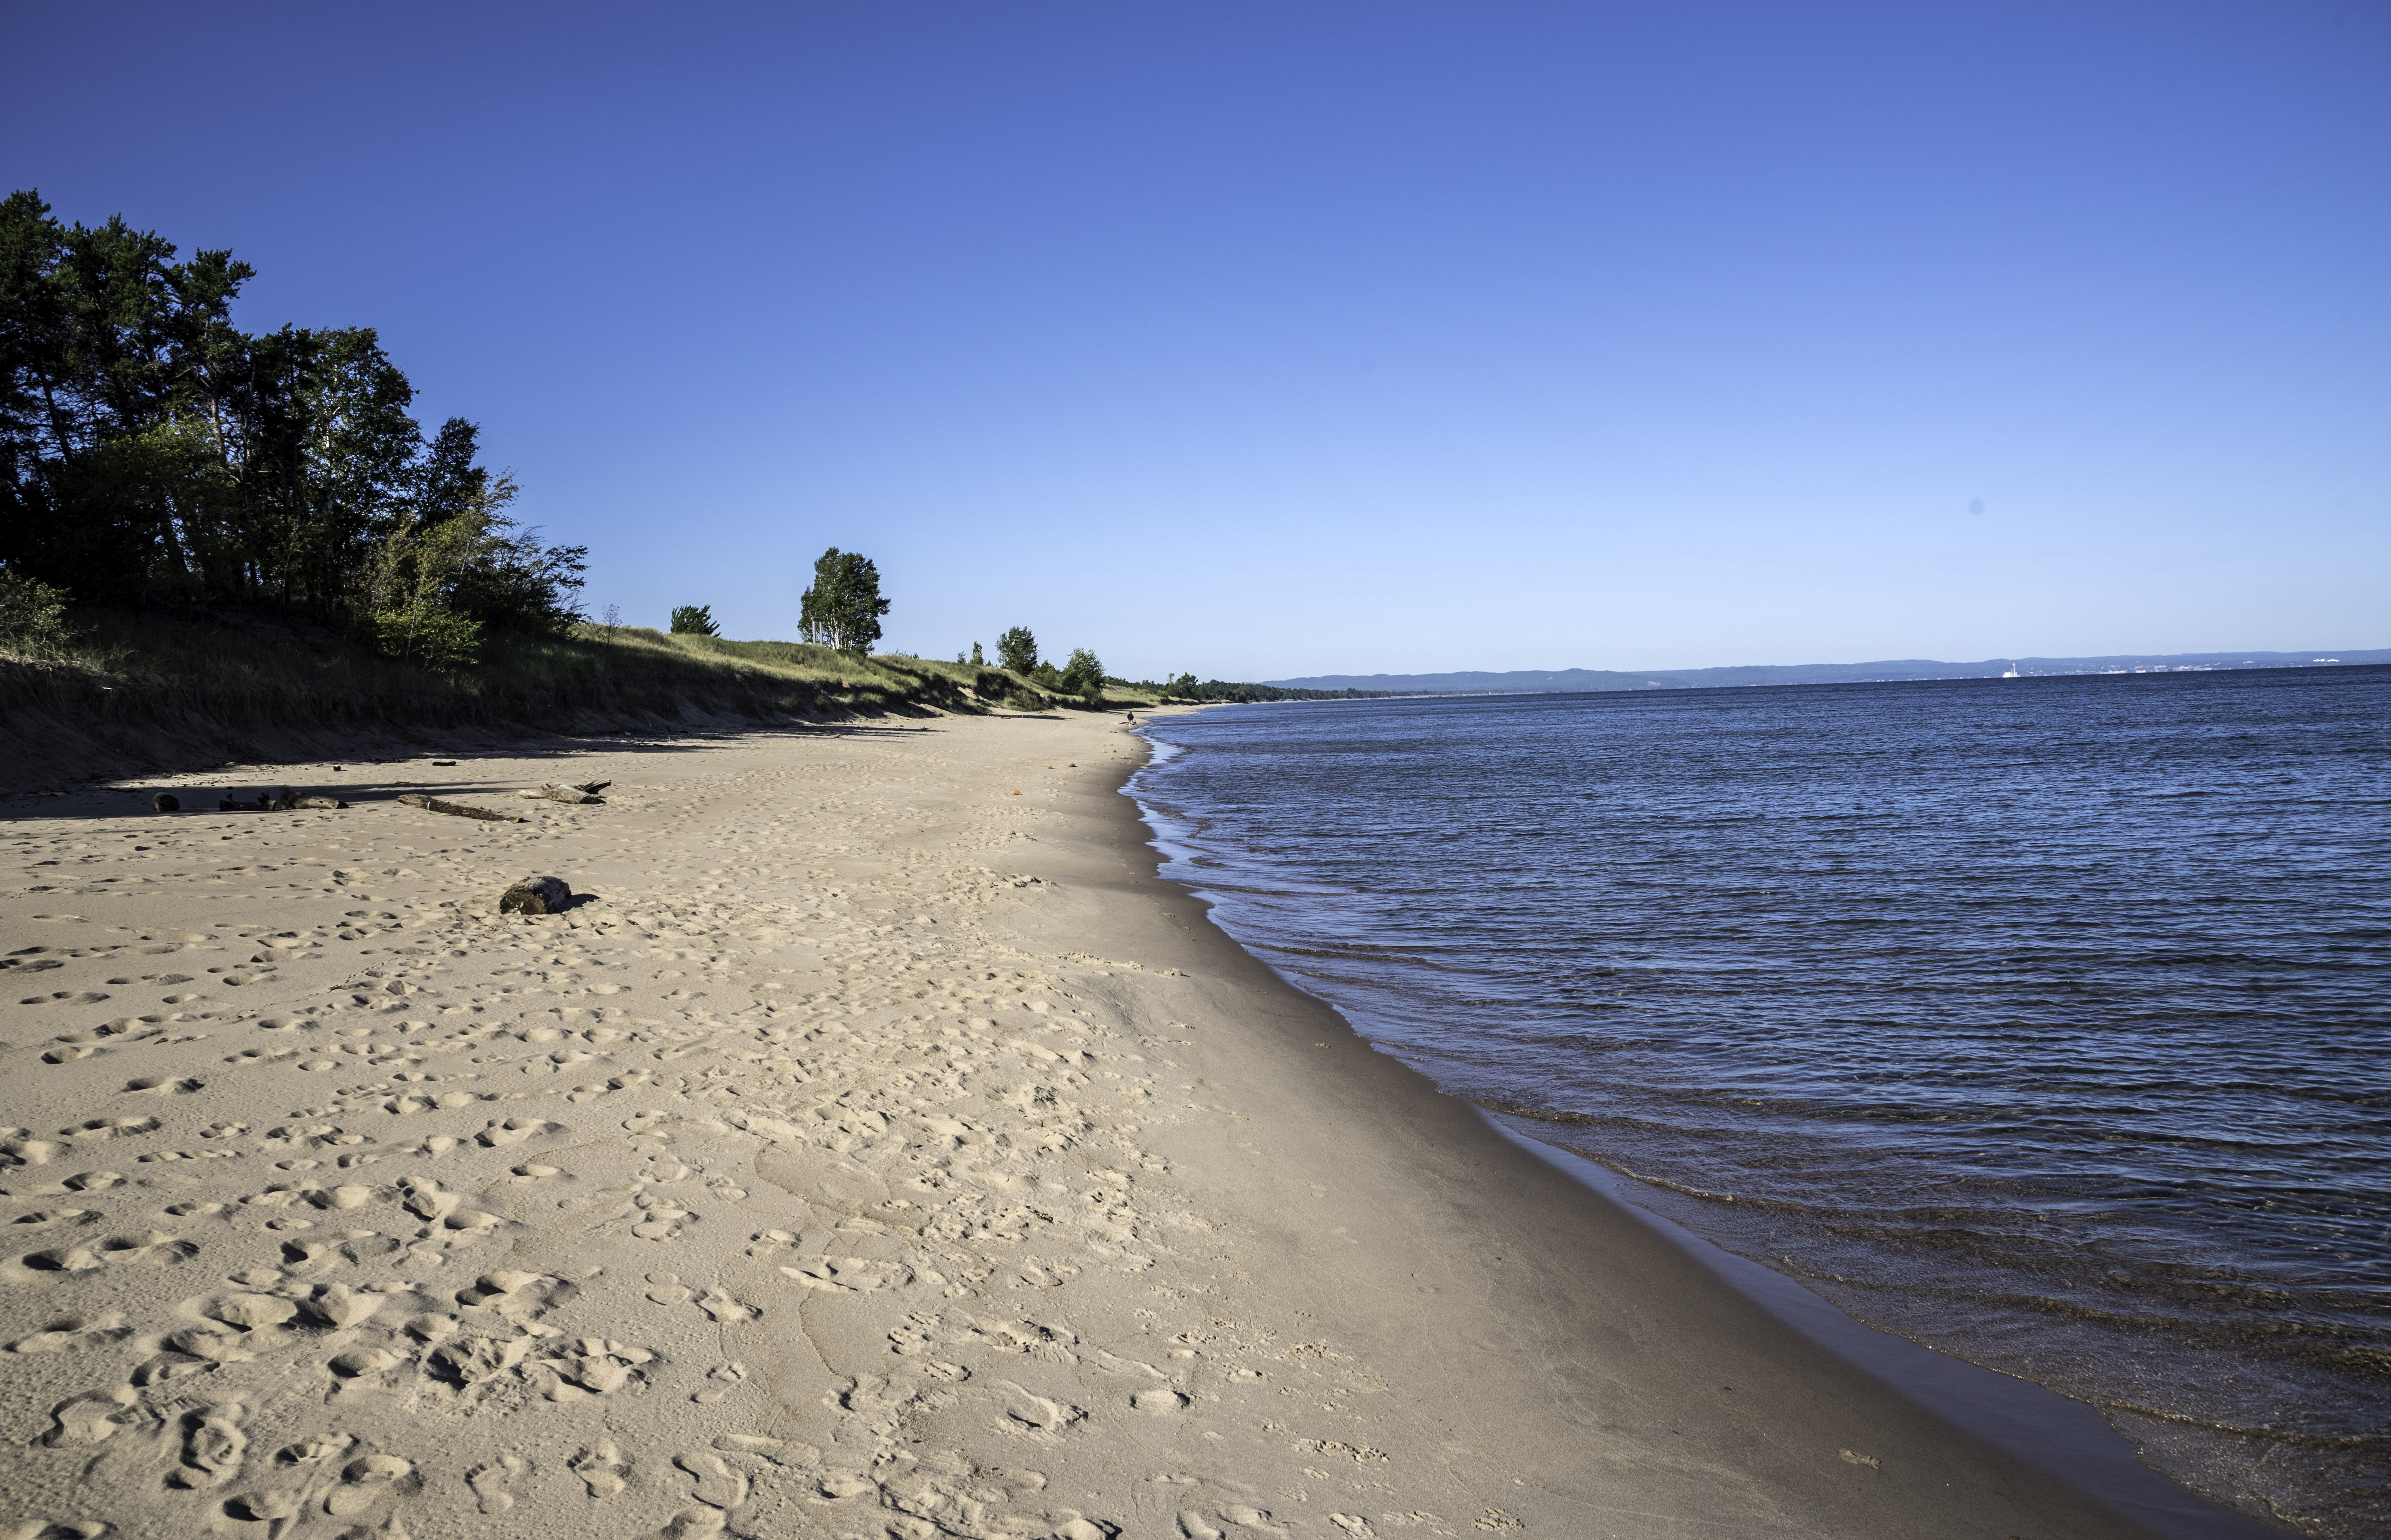 Shoreline landscape view in Upper Peninsula, Michigan image - Free ...